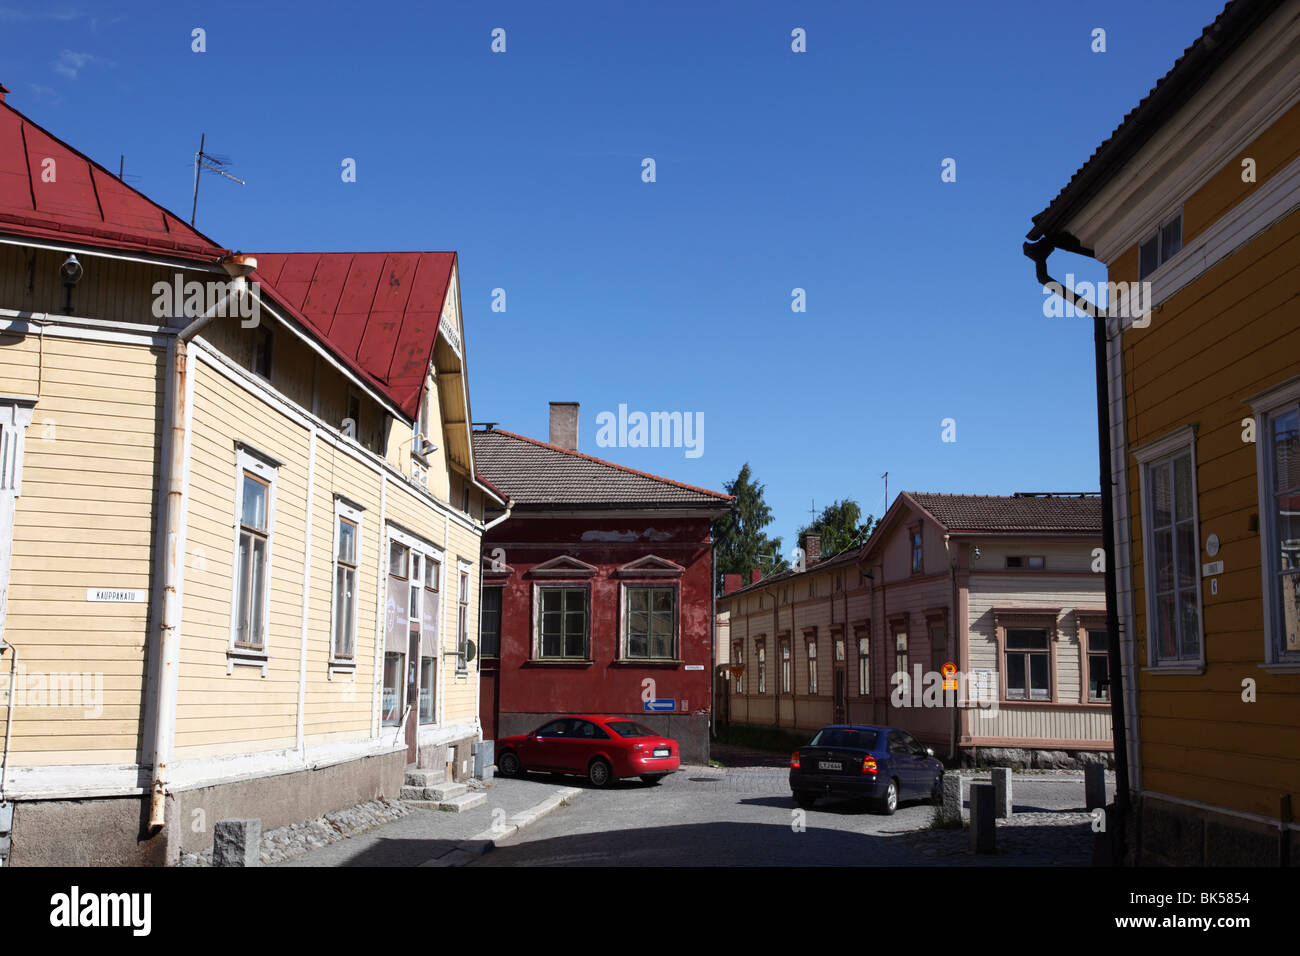 Historic street and wooden housing in Old Town, UNESCO World Heritage Site, Rauma, Satakunta, Finland, Scandinavia, Europe Stock Photo